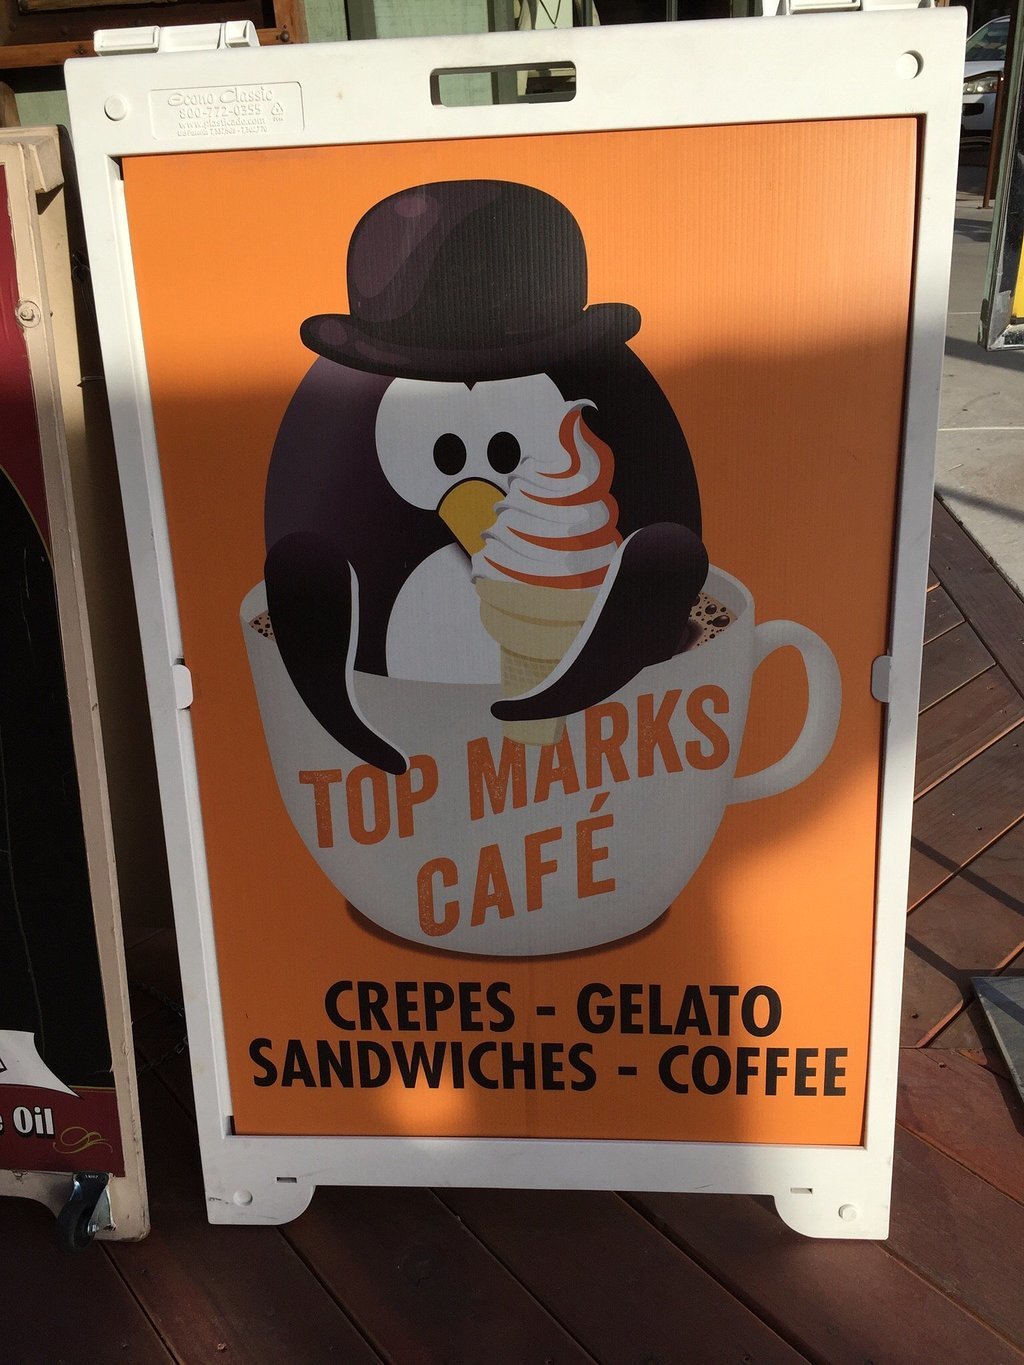 Top Marks Cafe